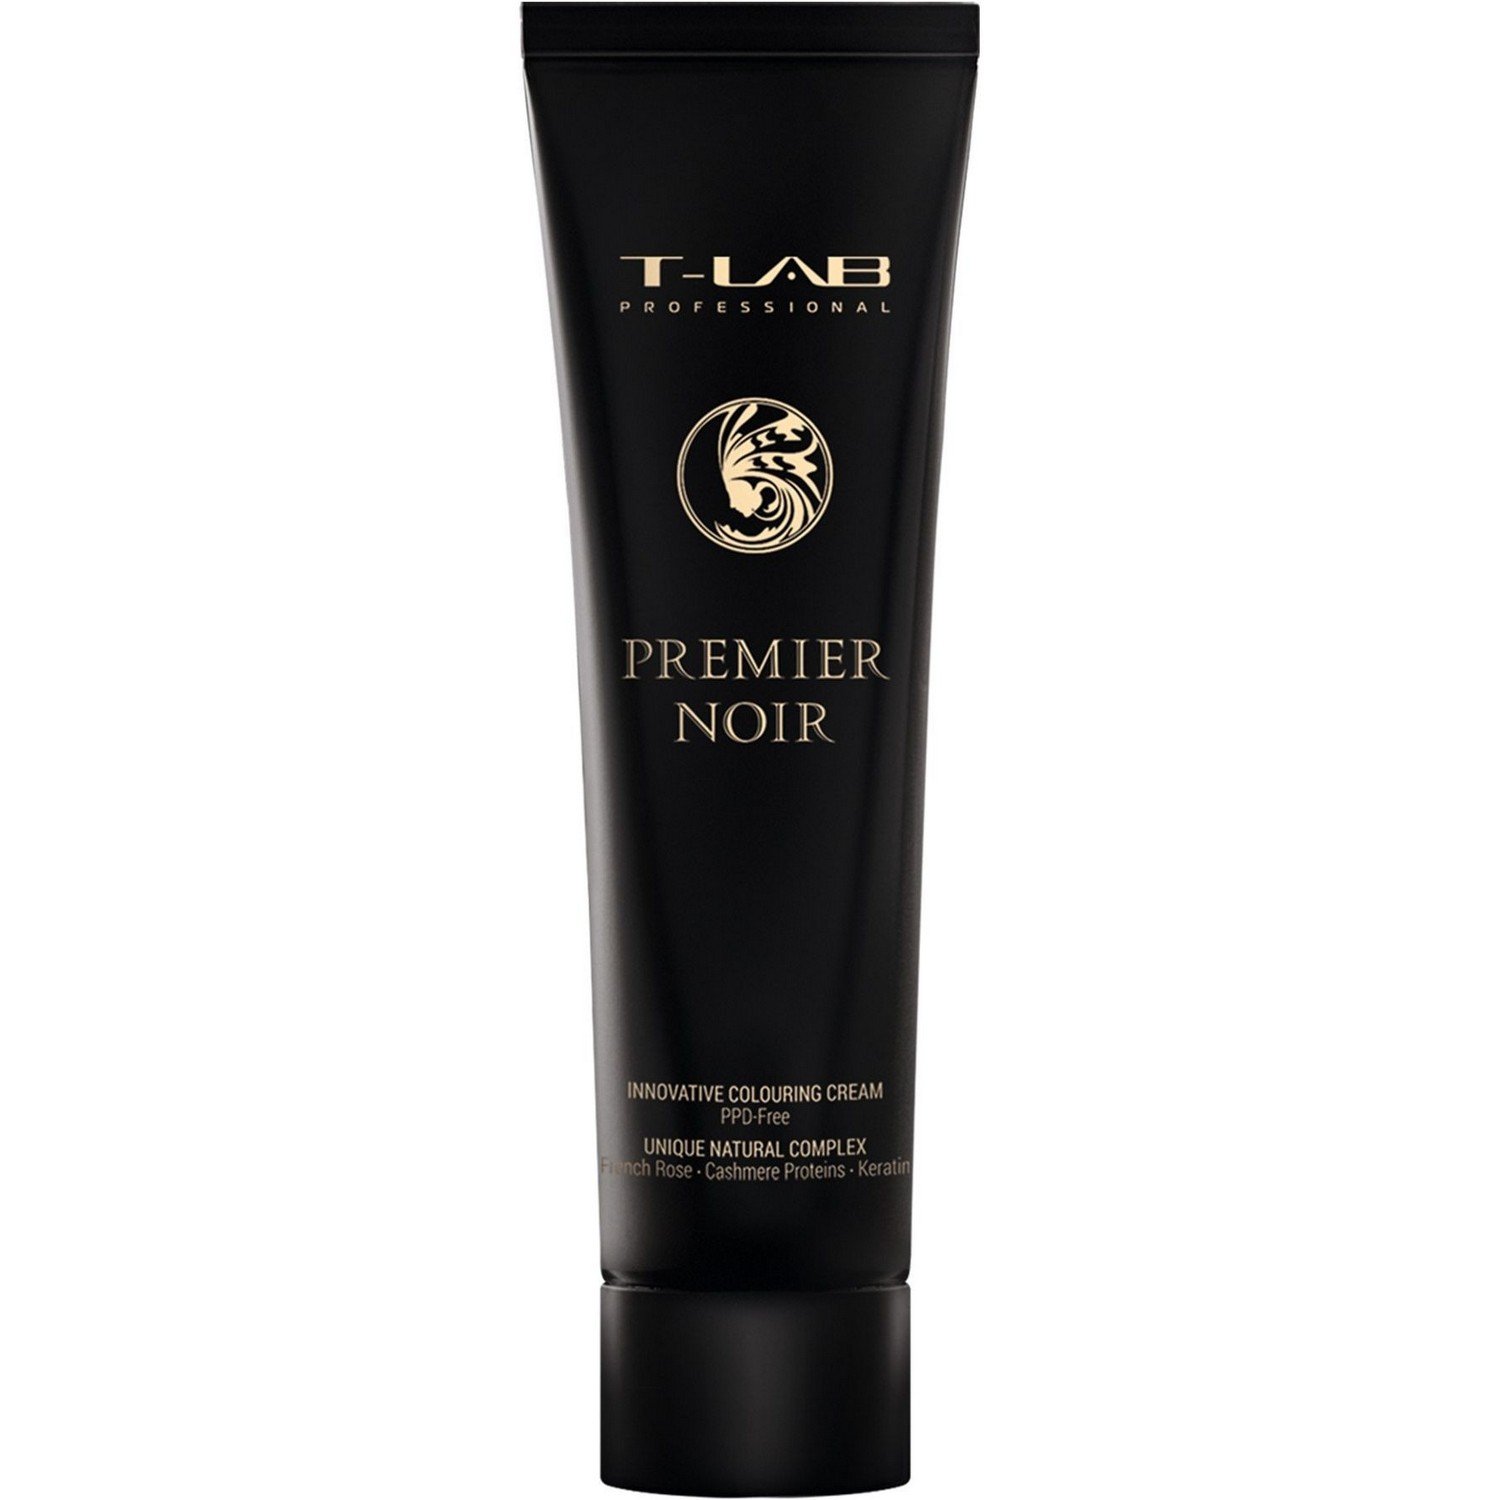 Крем-фарба T-LAB Professional Premier Noir colouring cream, відтінок 6.0 (natural dark blonde) - фото 1